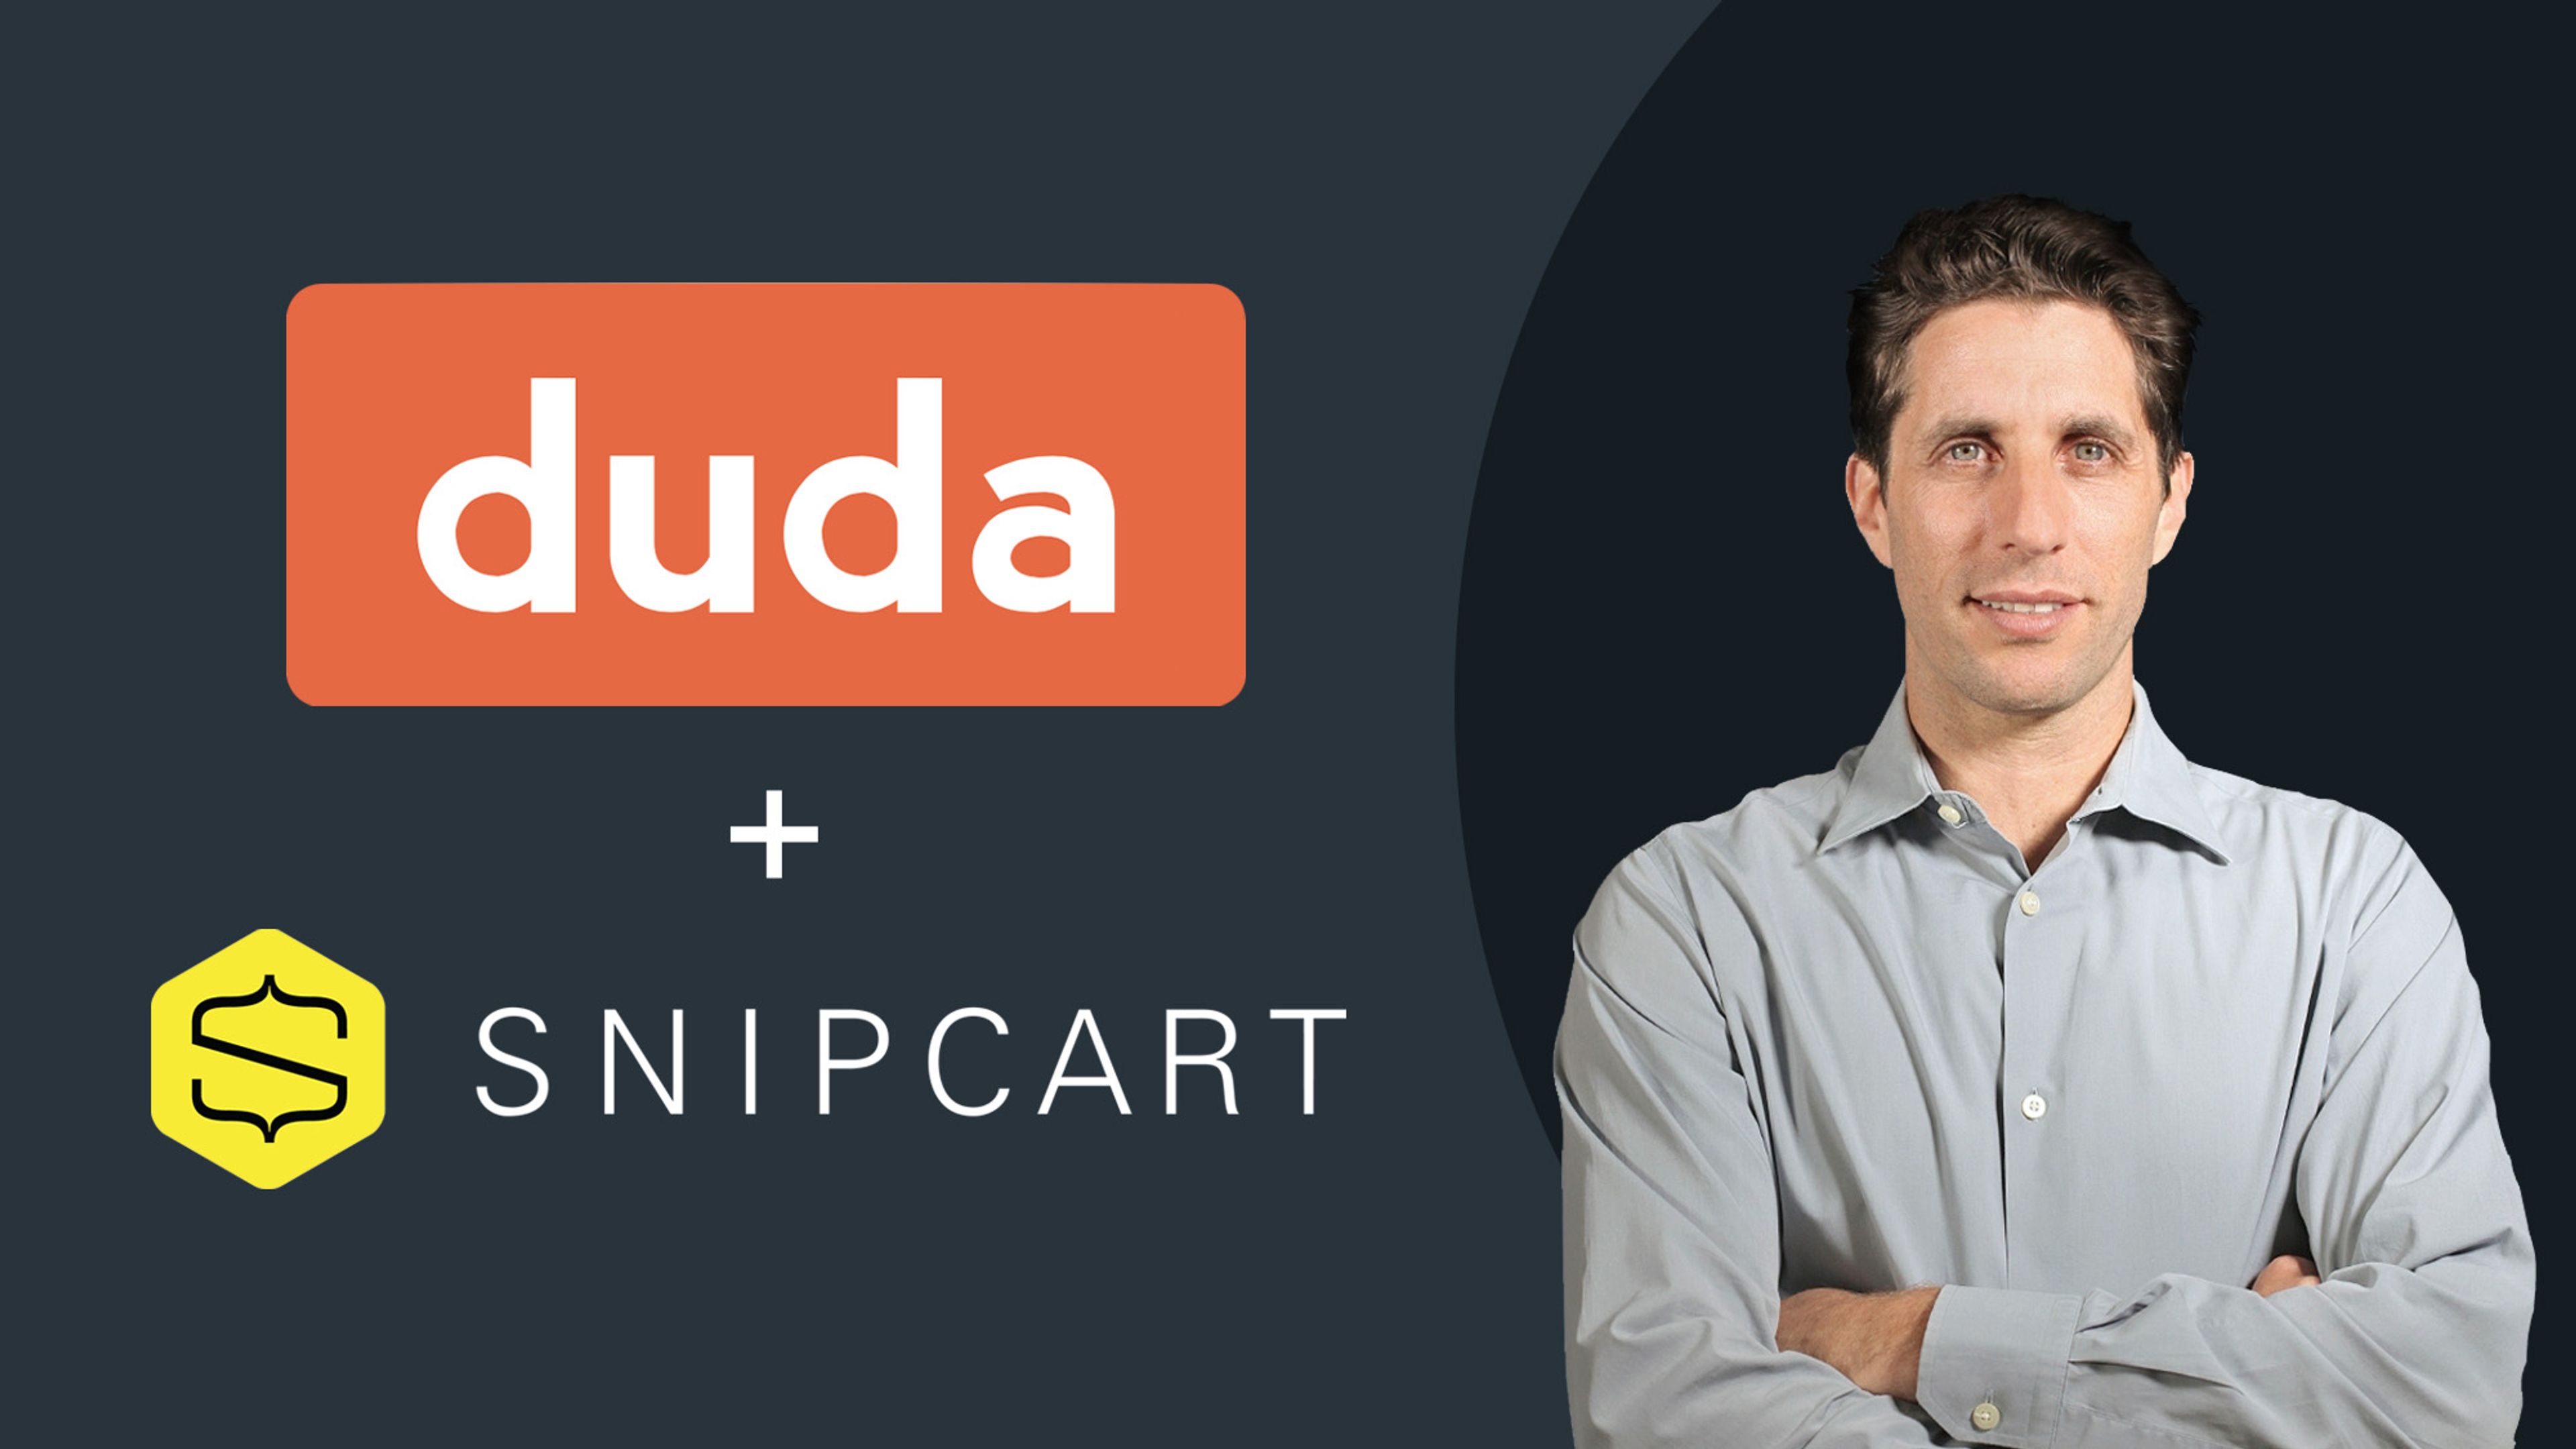 Duda and Snipcart logos with image of CEO Isai Sadan